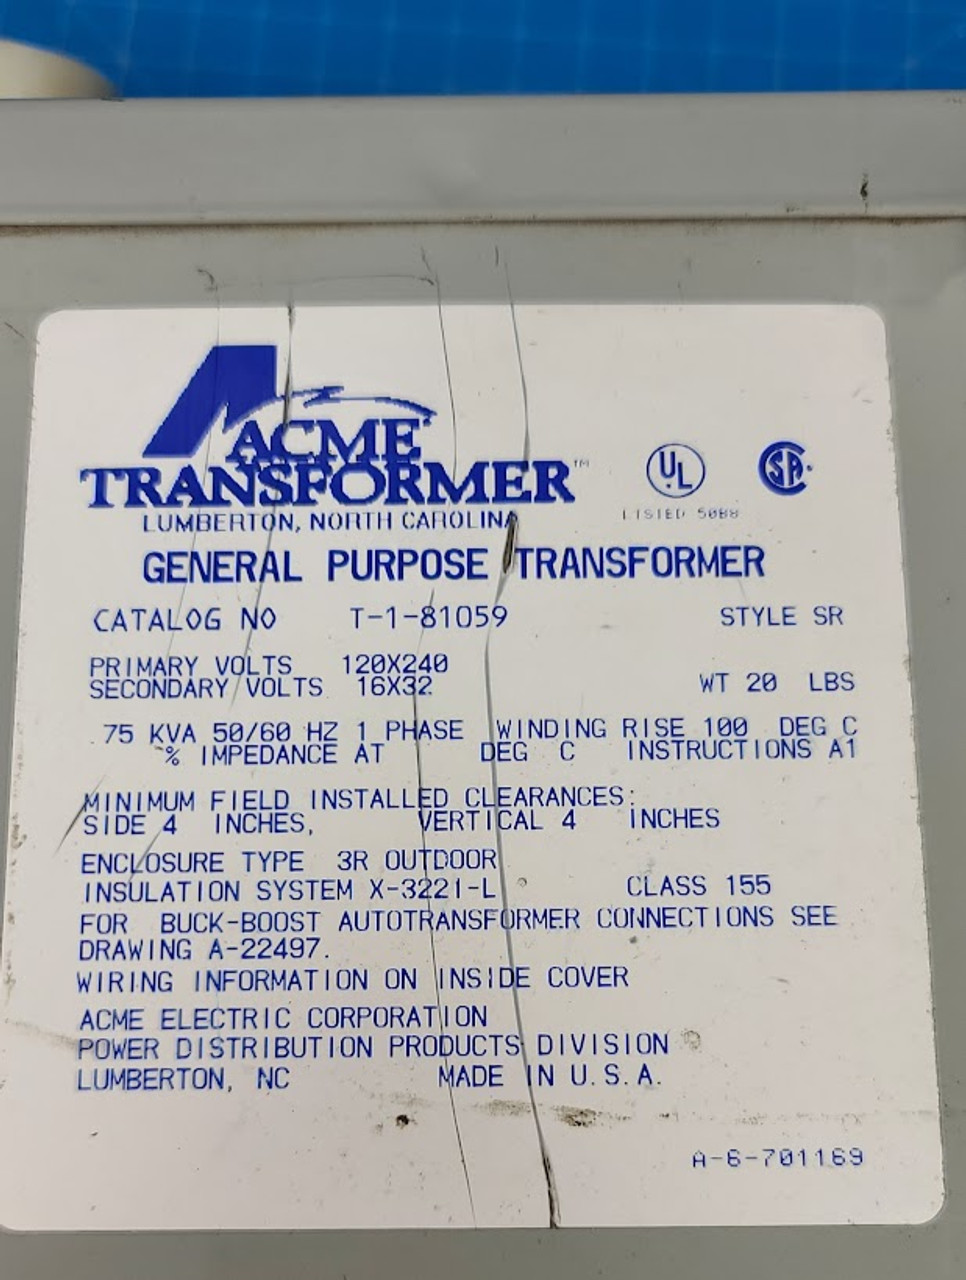 Acme Transformer 75 kVA 1 Phase 120/240 x 16/32 VAC General Purpose Transformer T-1-81059